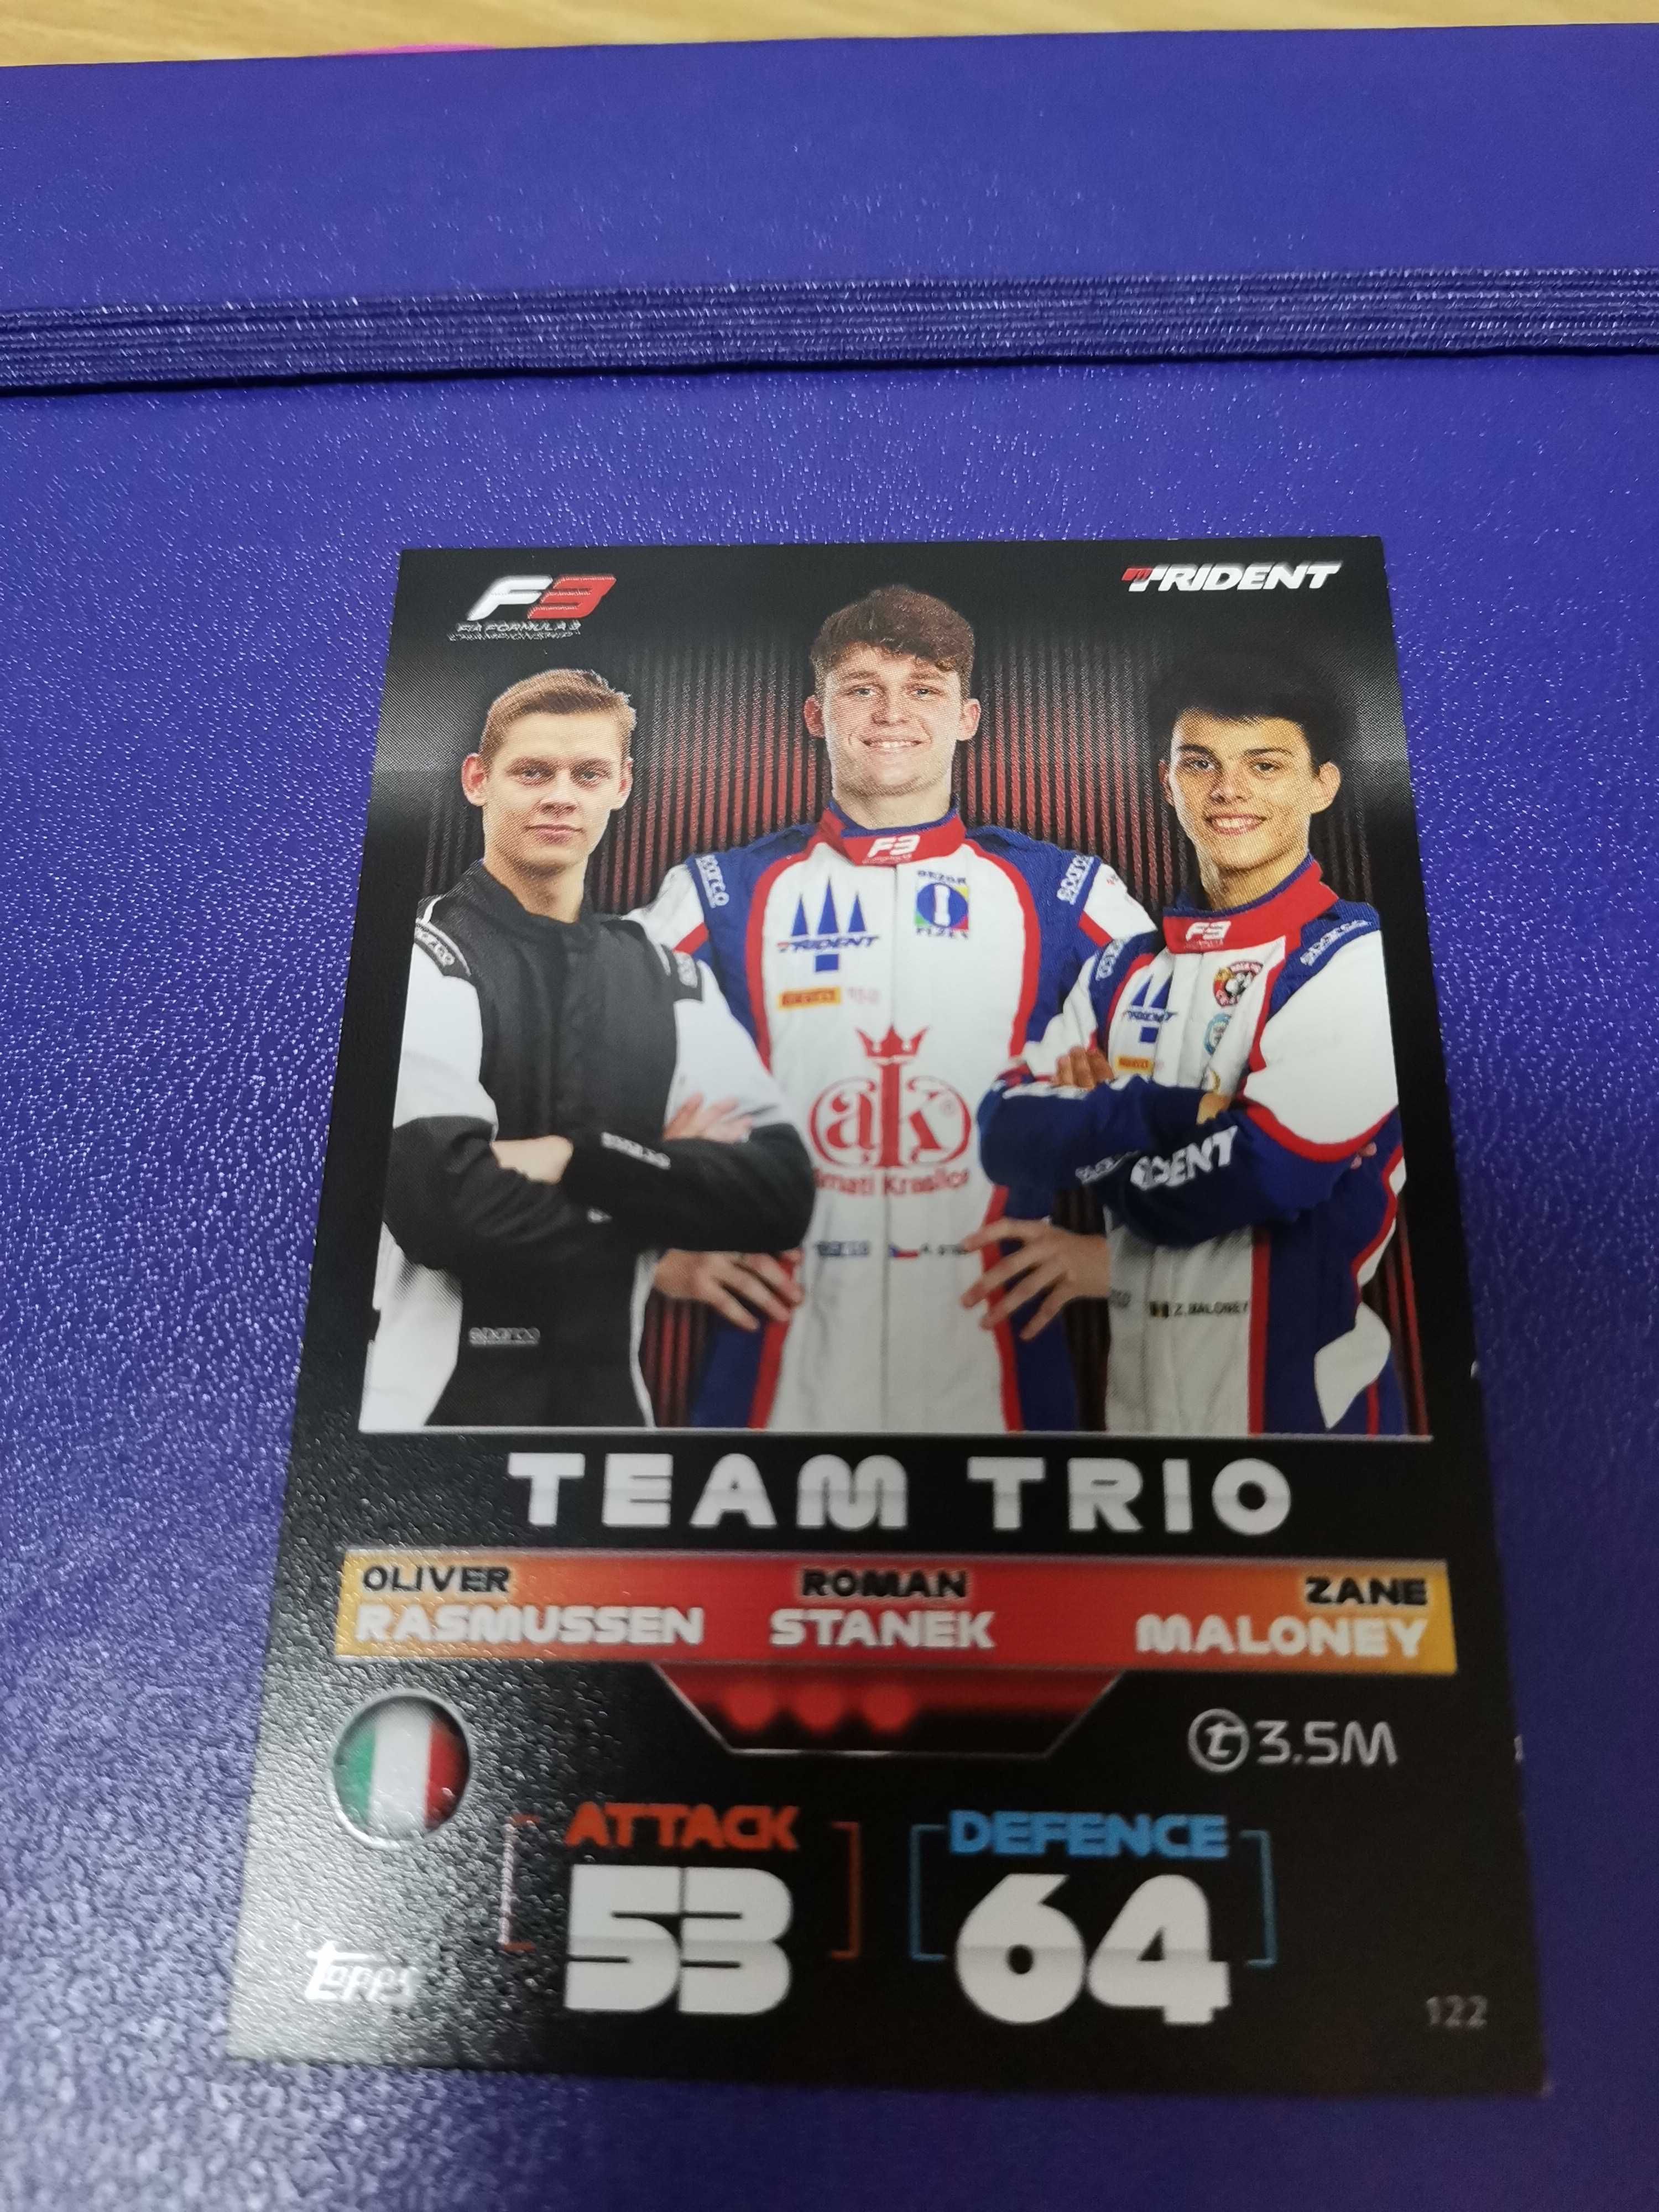 Oliver Rasmussen,Roman Stanek and Zane Maloney F1 topps Turbo Attack